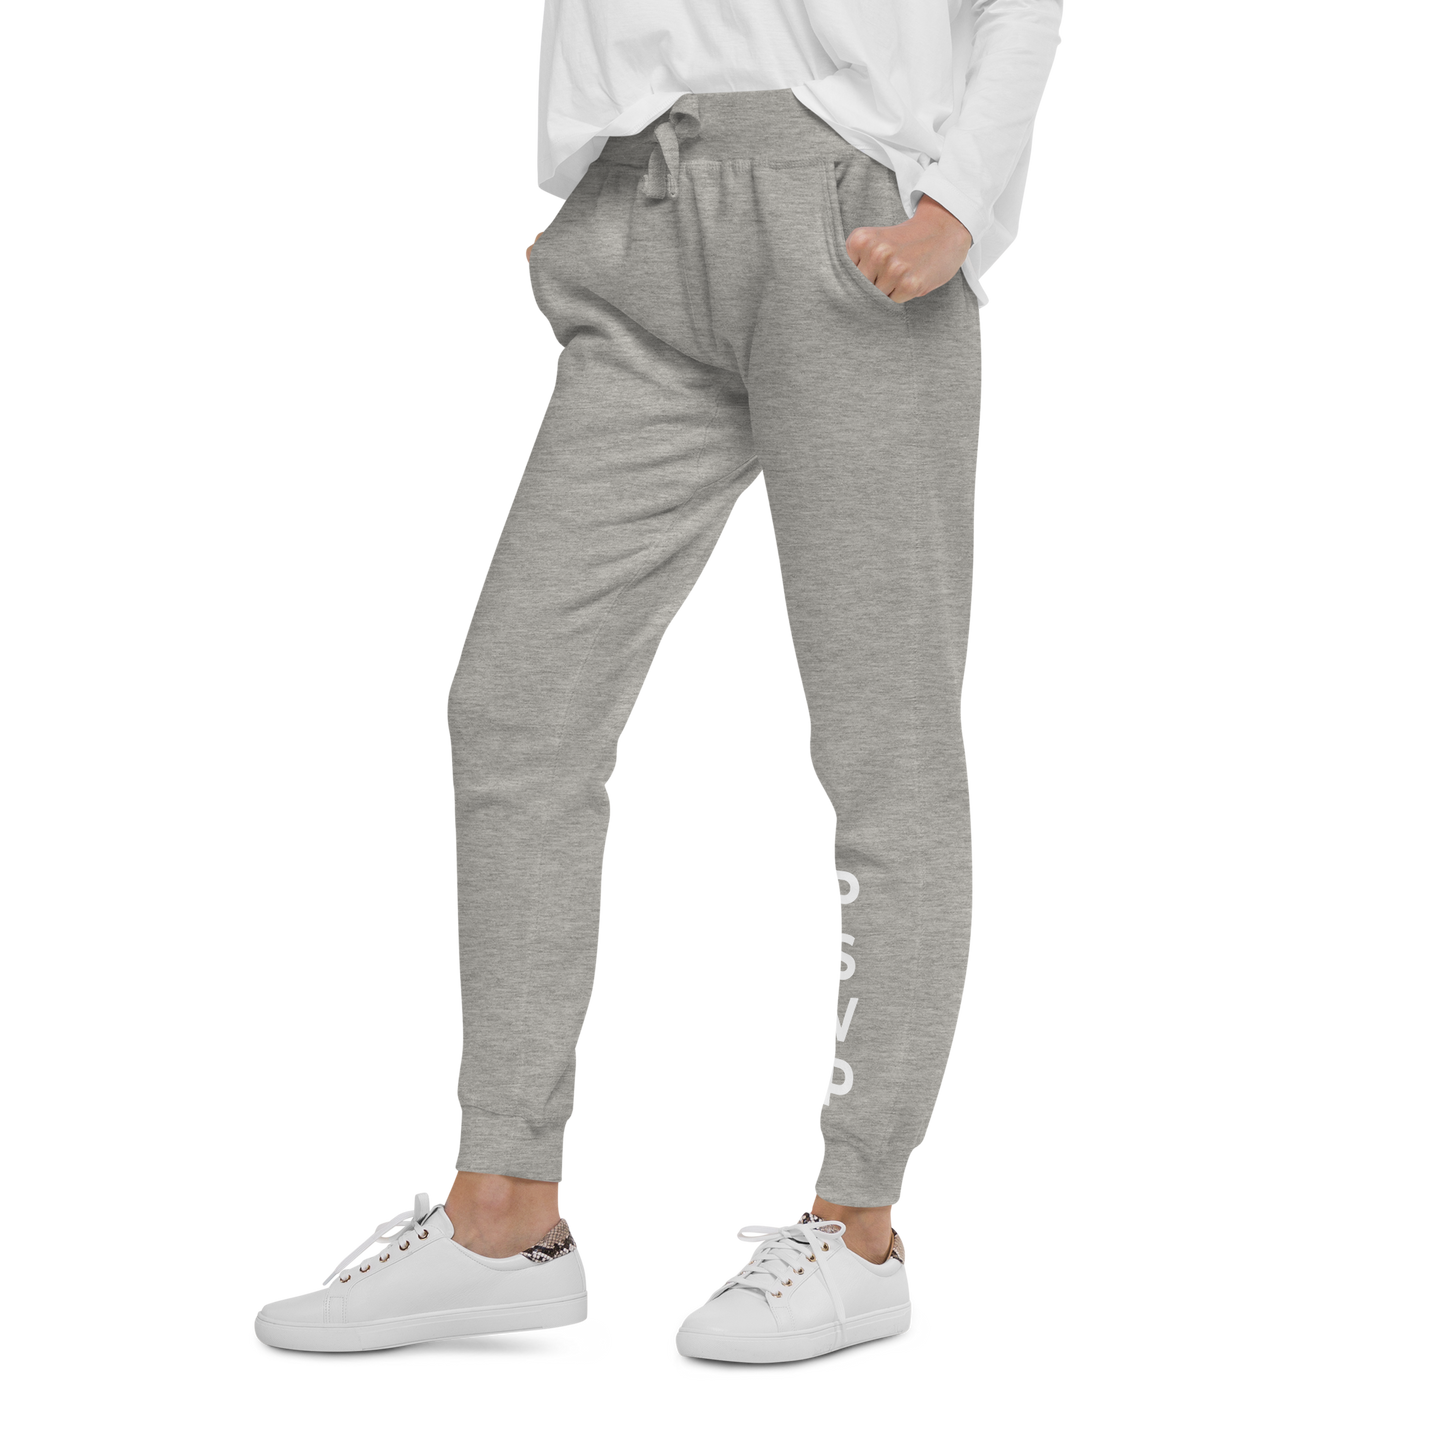 Women's Fleece Light Grey Sweatpants - PSVP | Sweatpants | PARADIS SVP